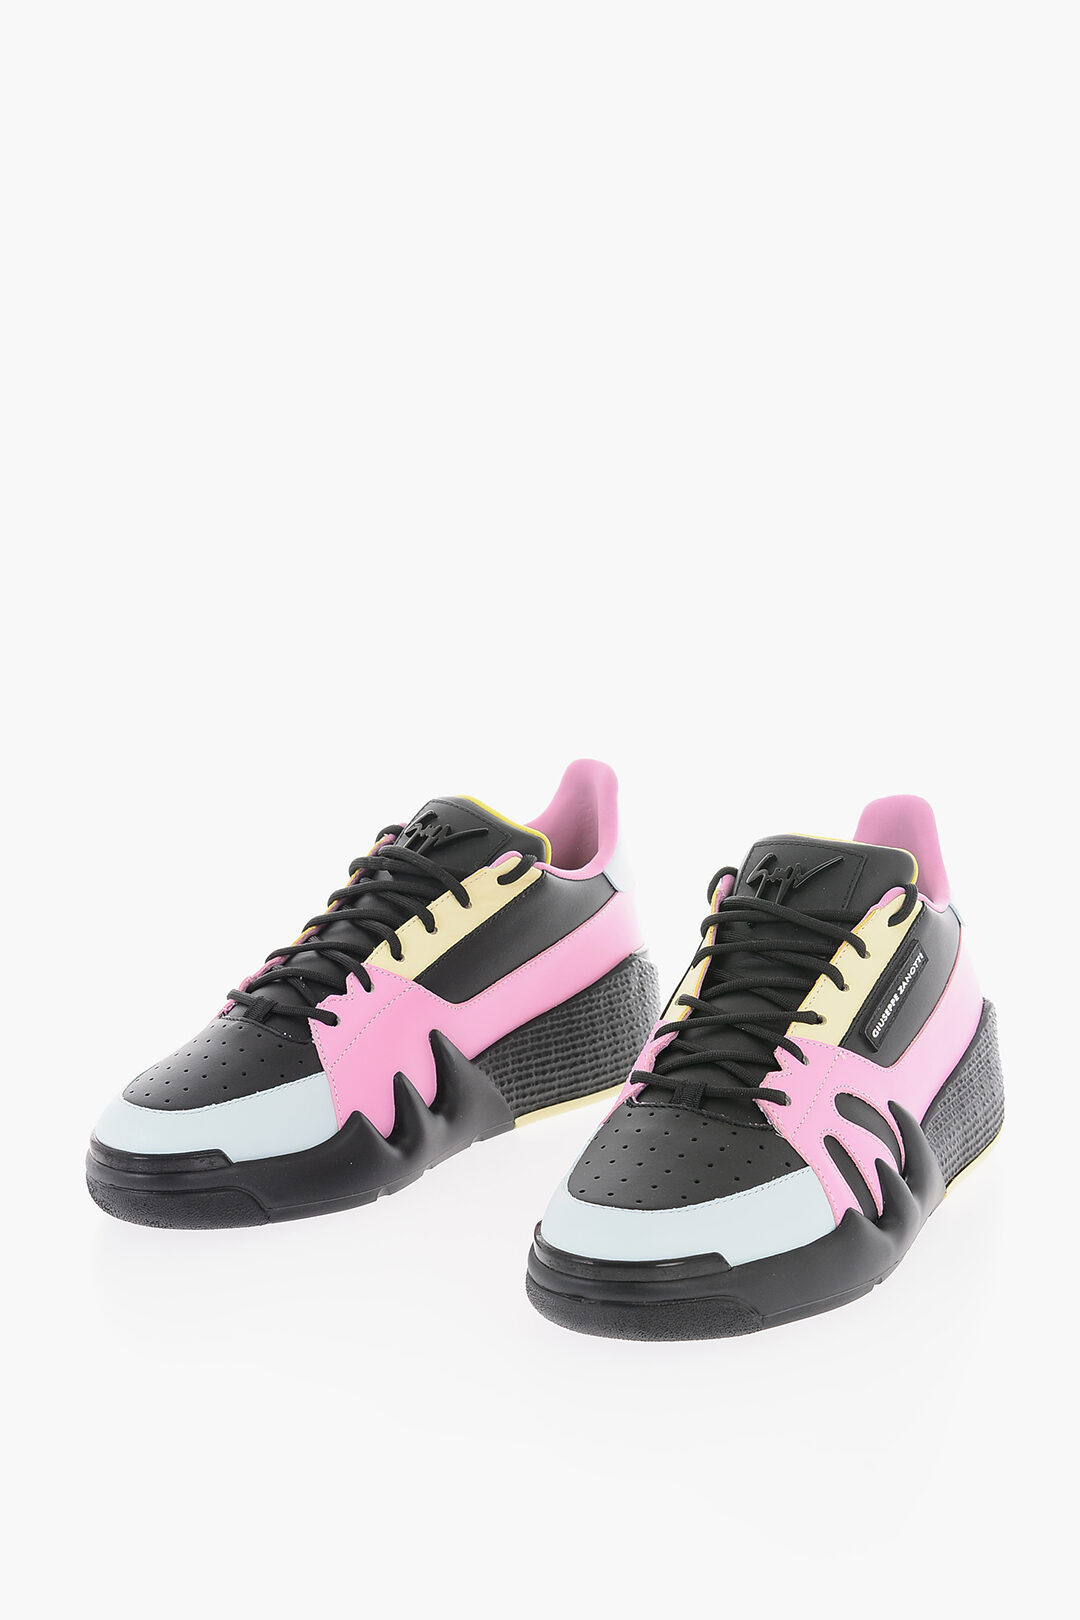 Giuseppe Zanotti Multicolor Leather TALON Sneakers women - Glamood Outlet